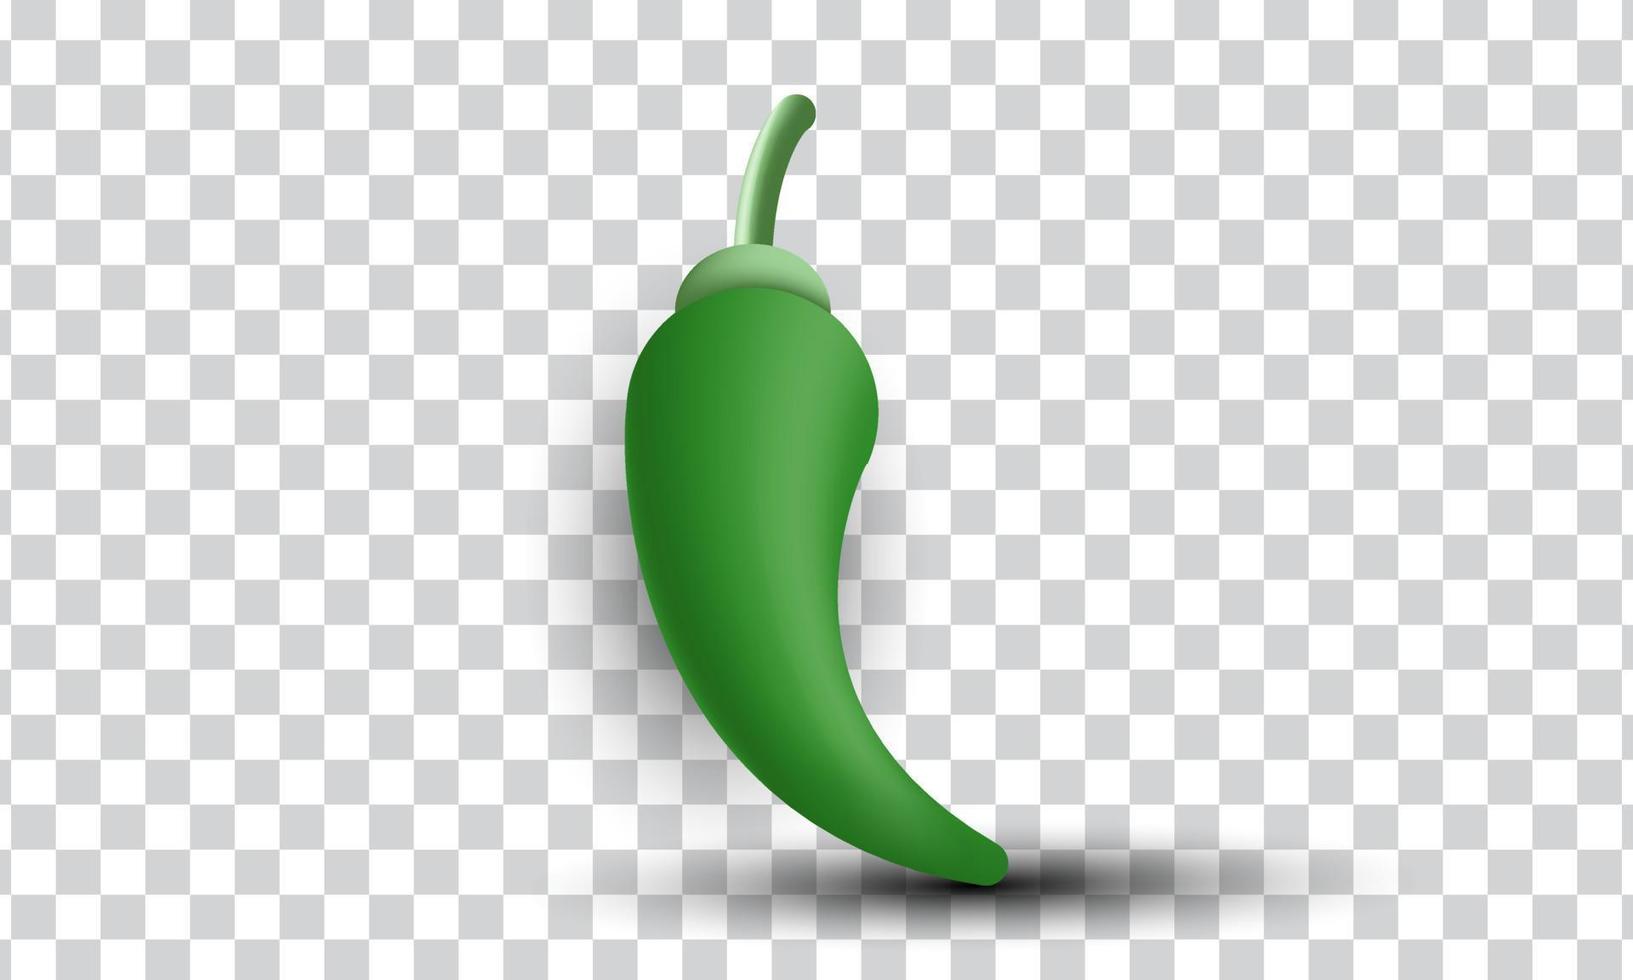 unique 3d green chili icon design isolated on vector